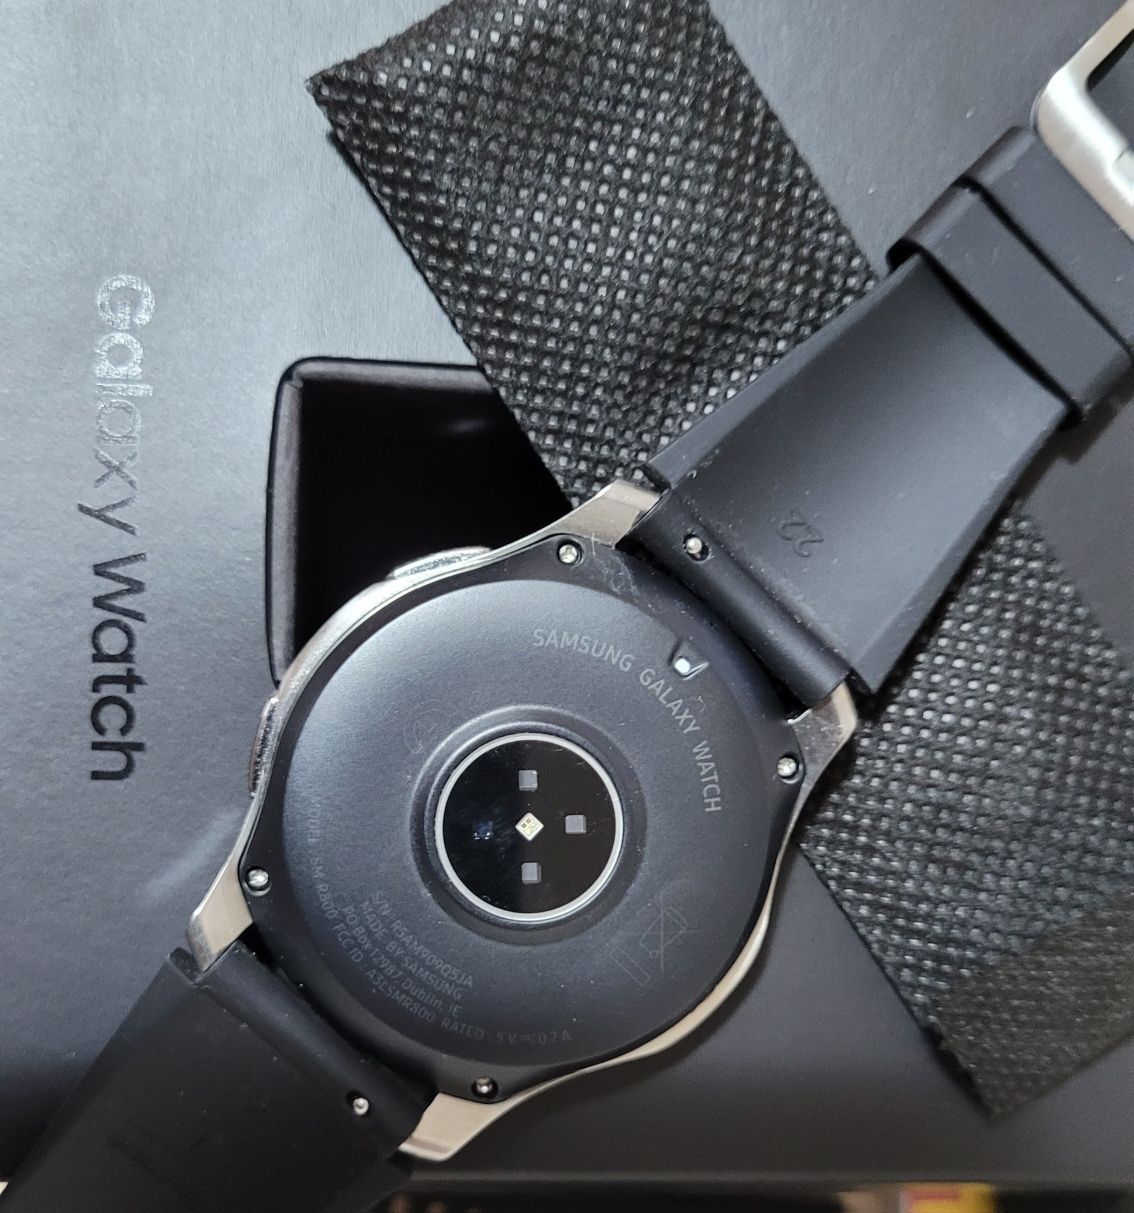 Samsung Galaxy Watch 46 mm